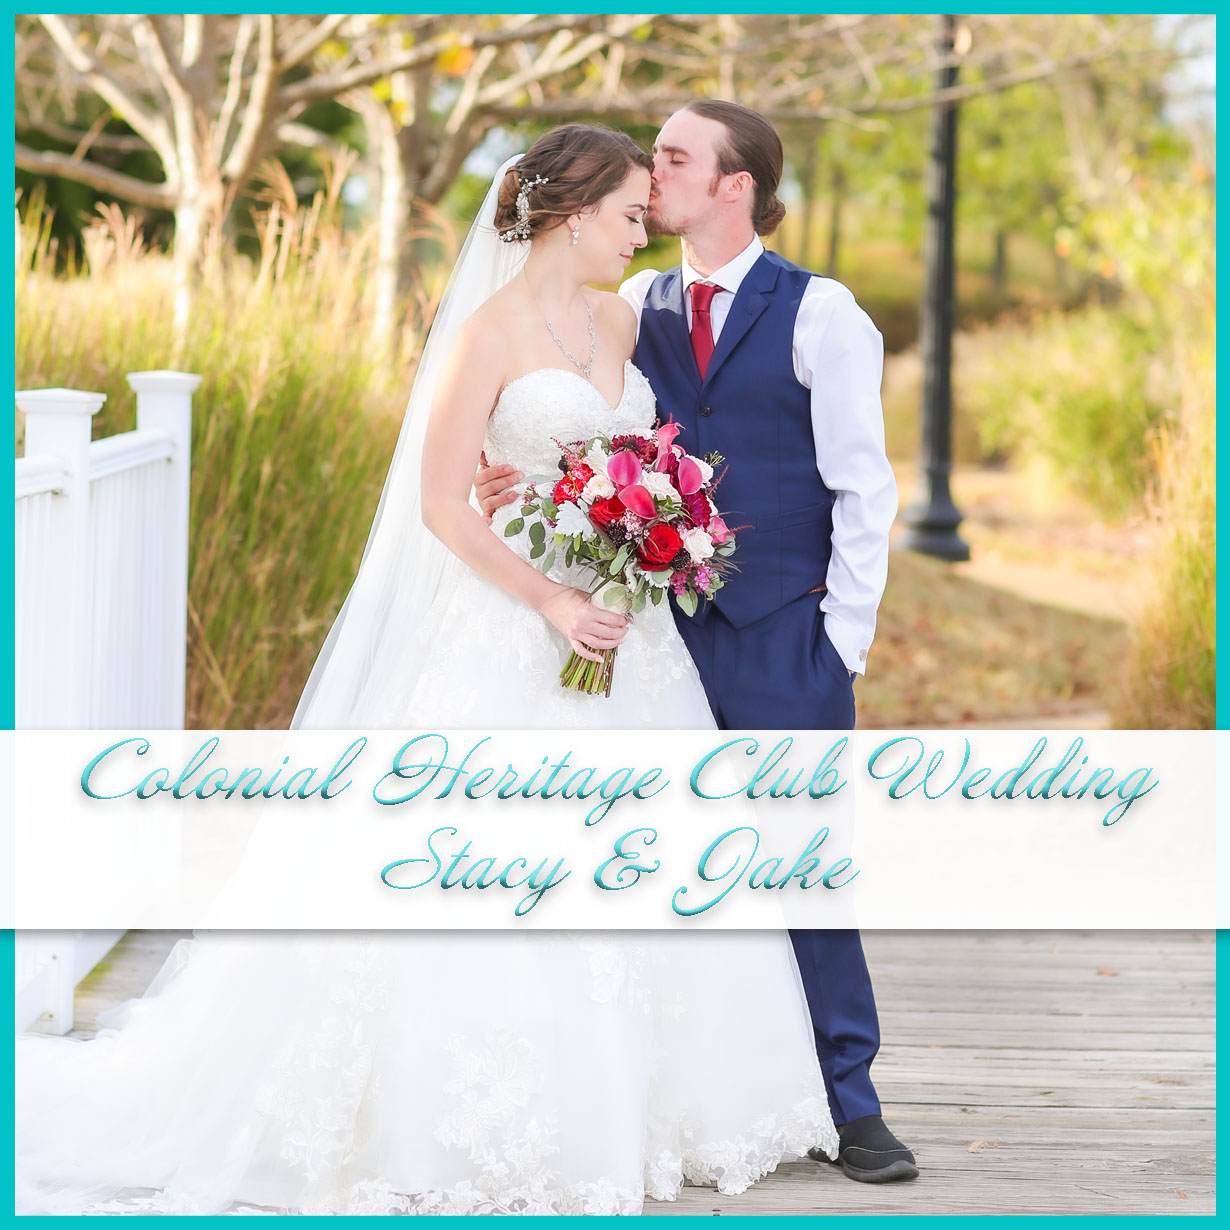 Colonial Heritage Club Wedding